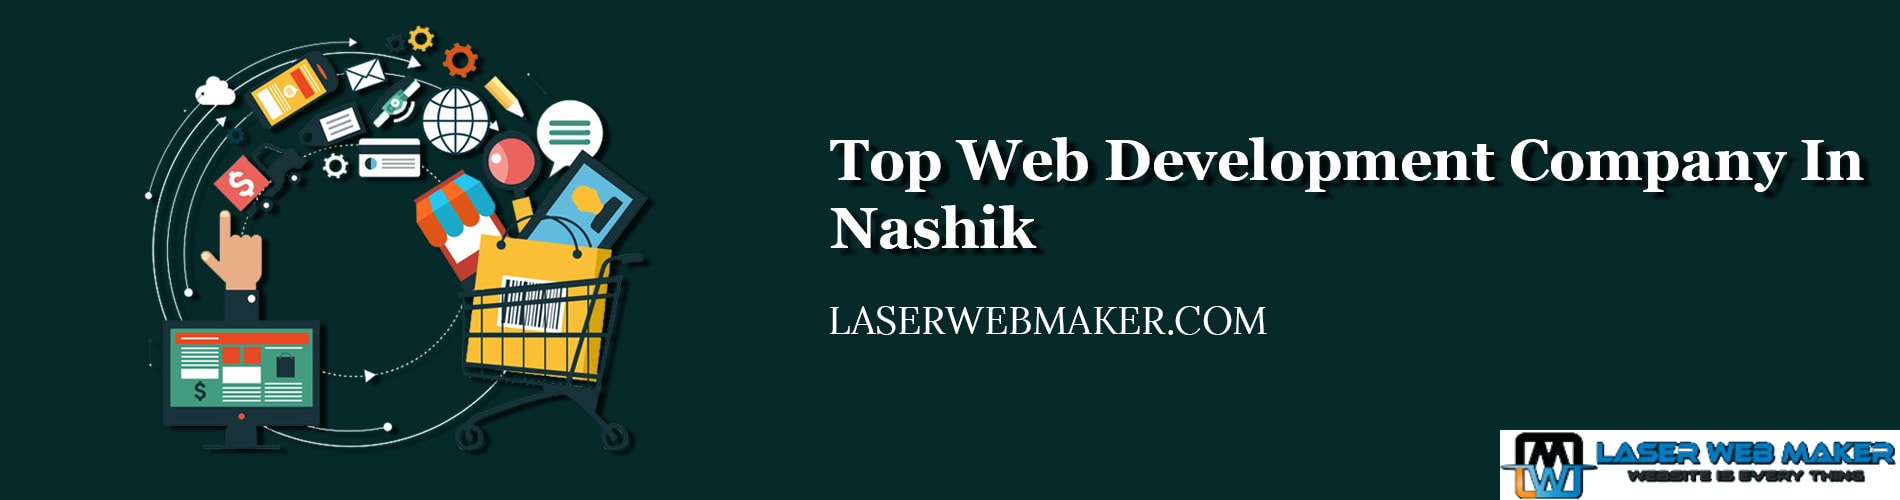 Top Web Development Company In Nashik